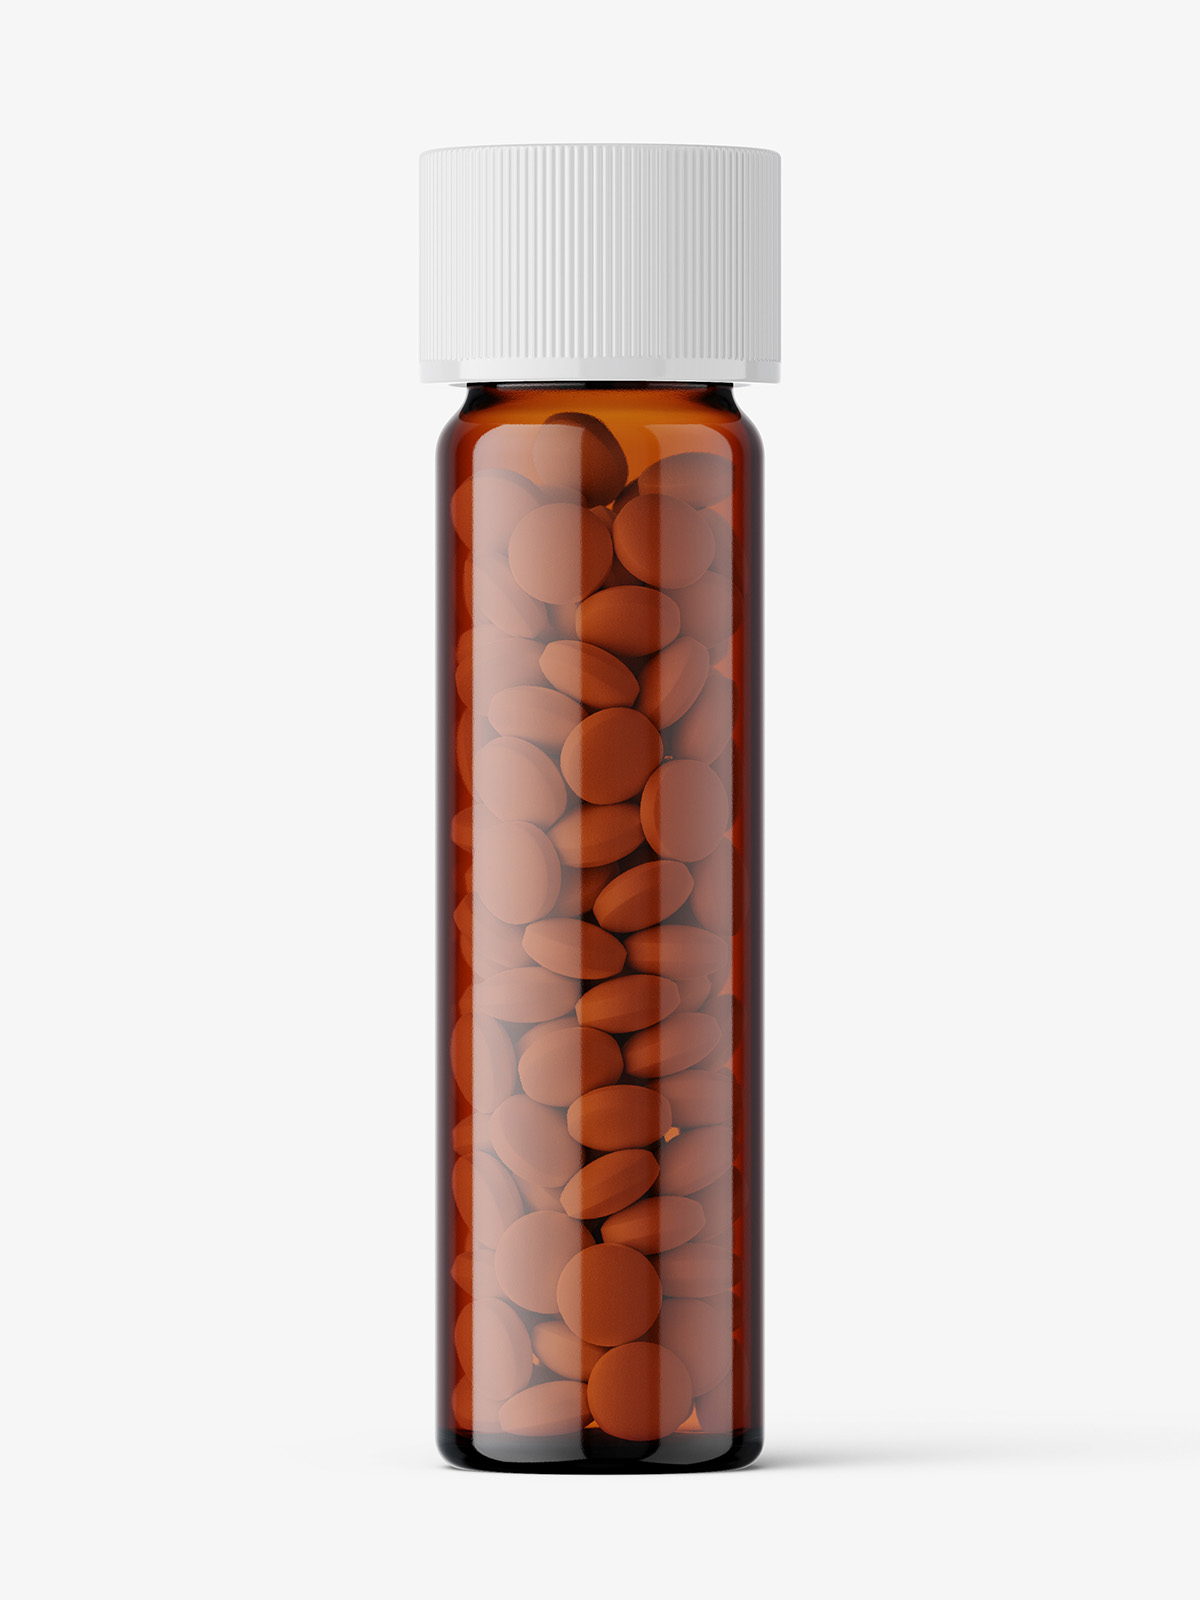 Download Amber bottle with herbal pills mockup - Smarty Mockups